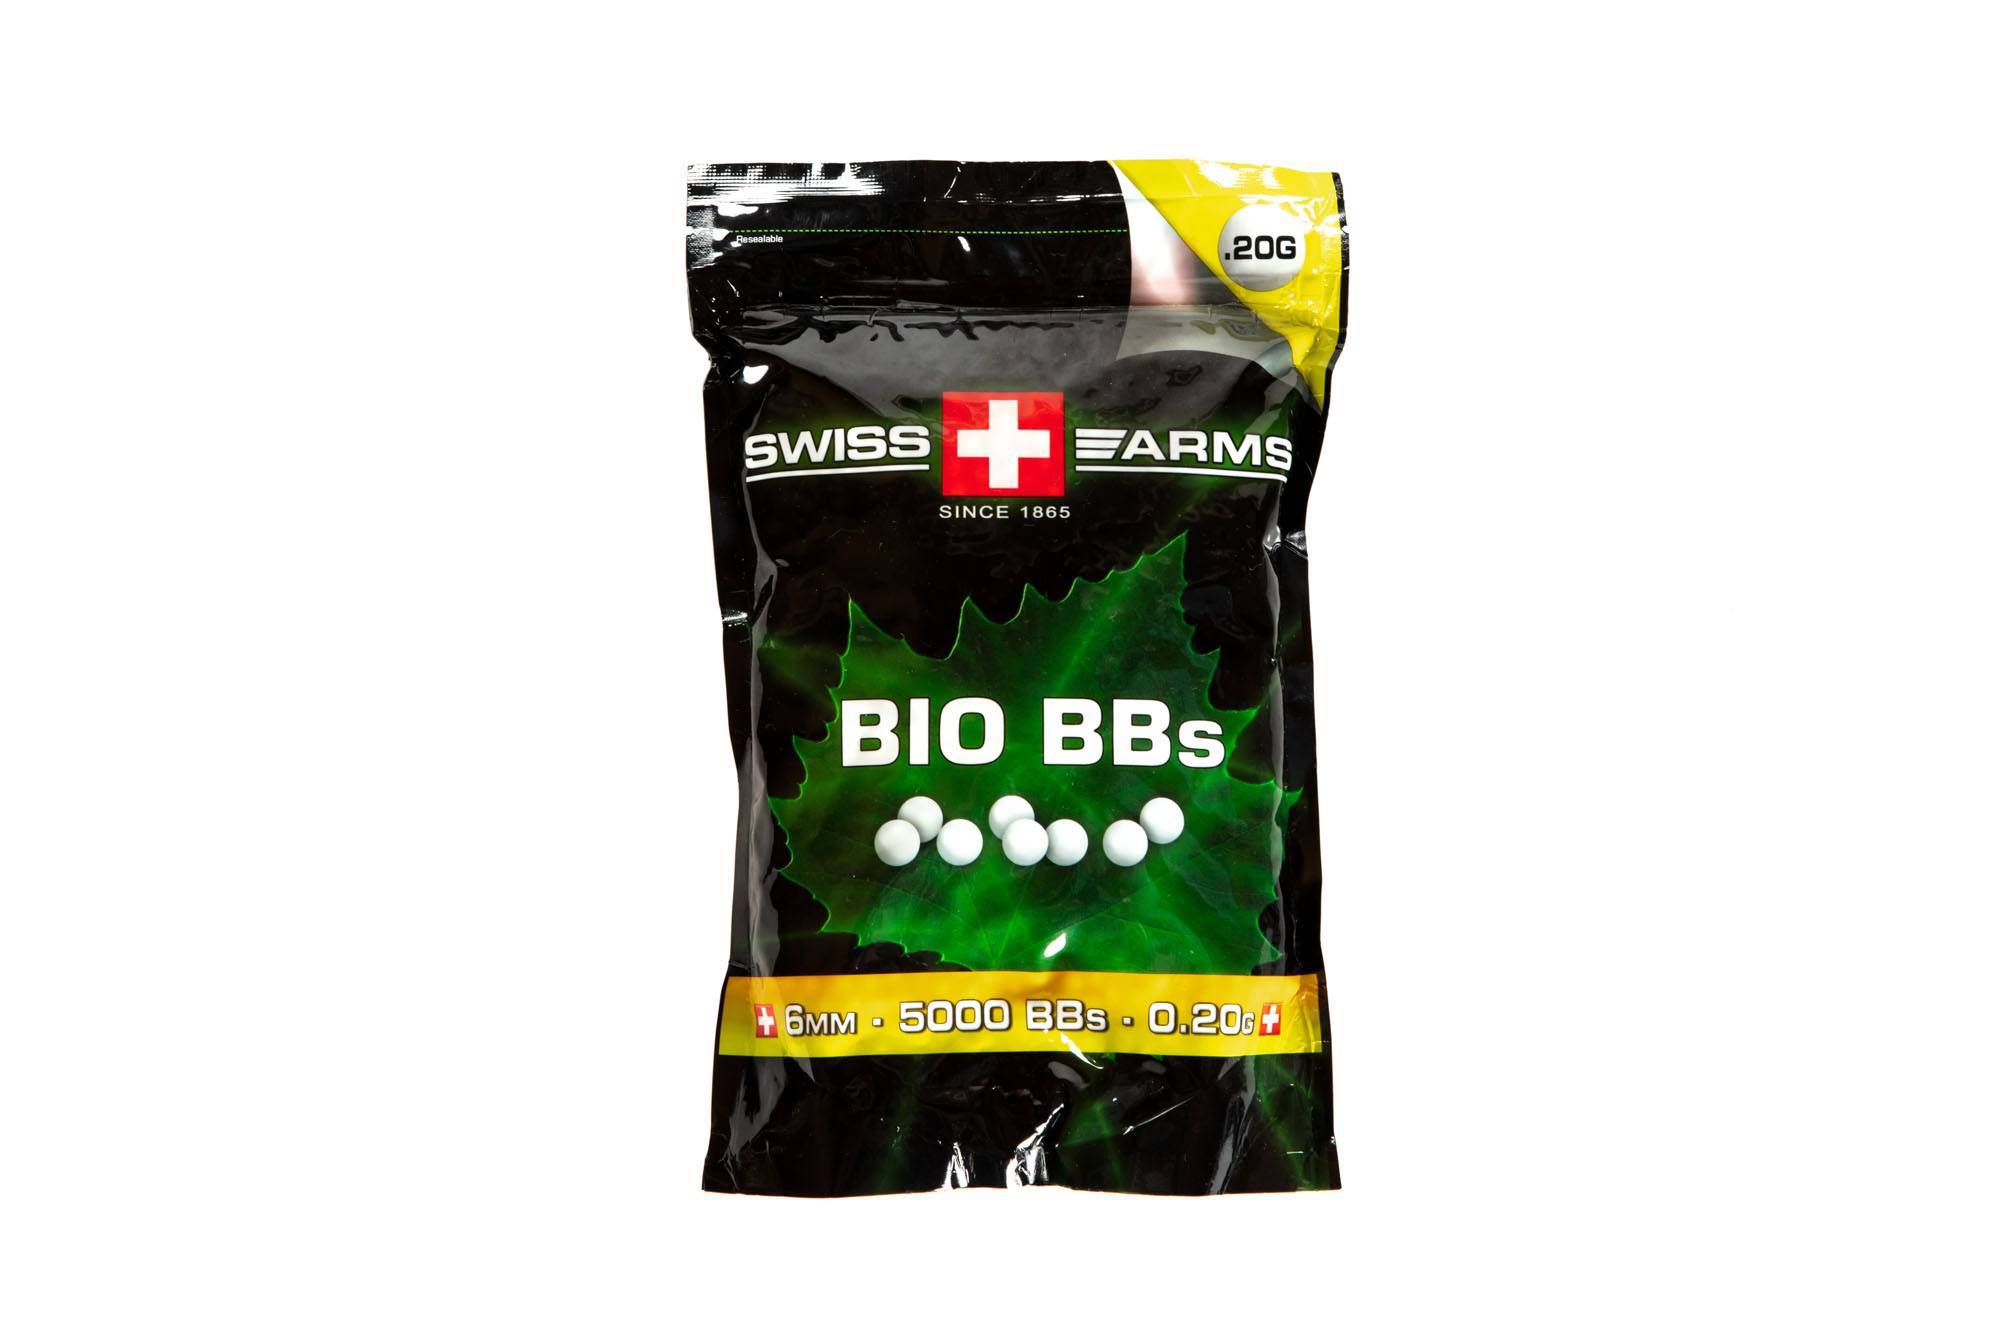 Biodegradable 0.20g SWISS ARMS BBs - 1 kg